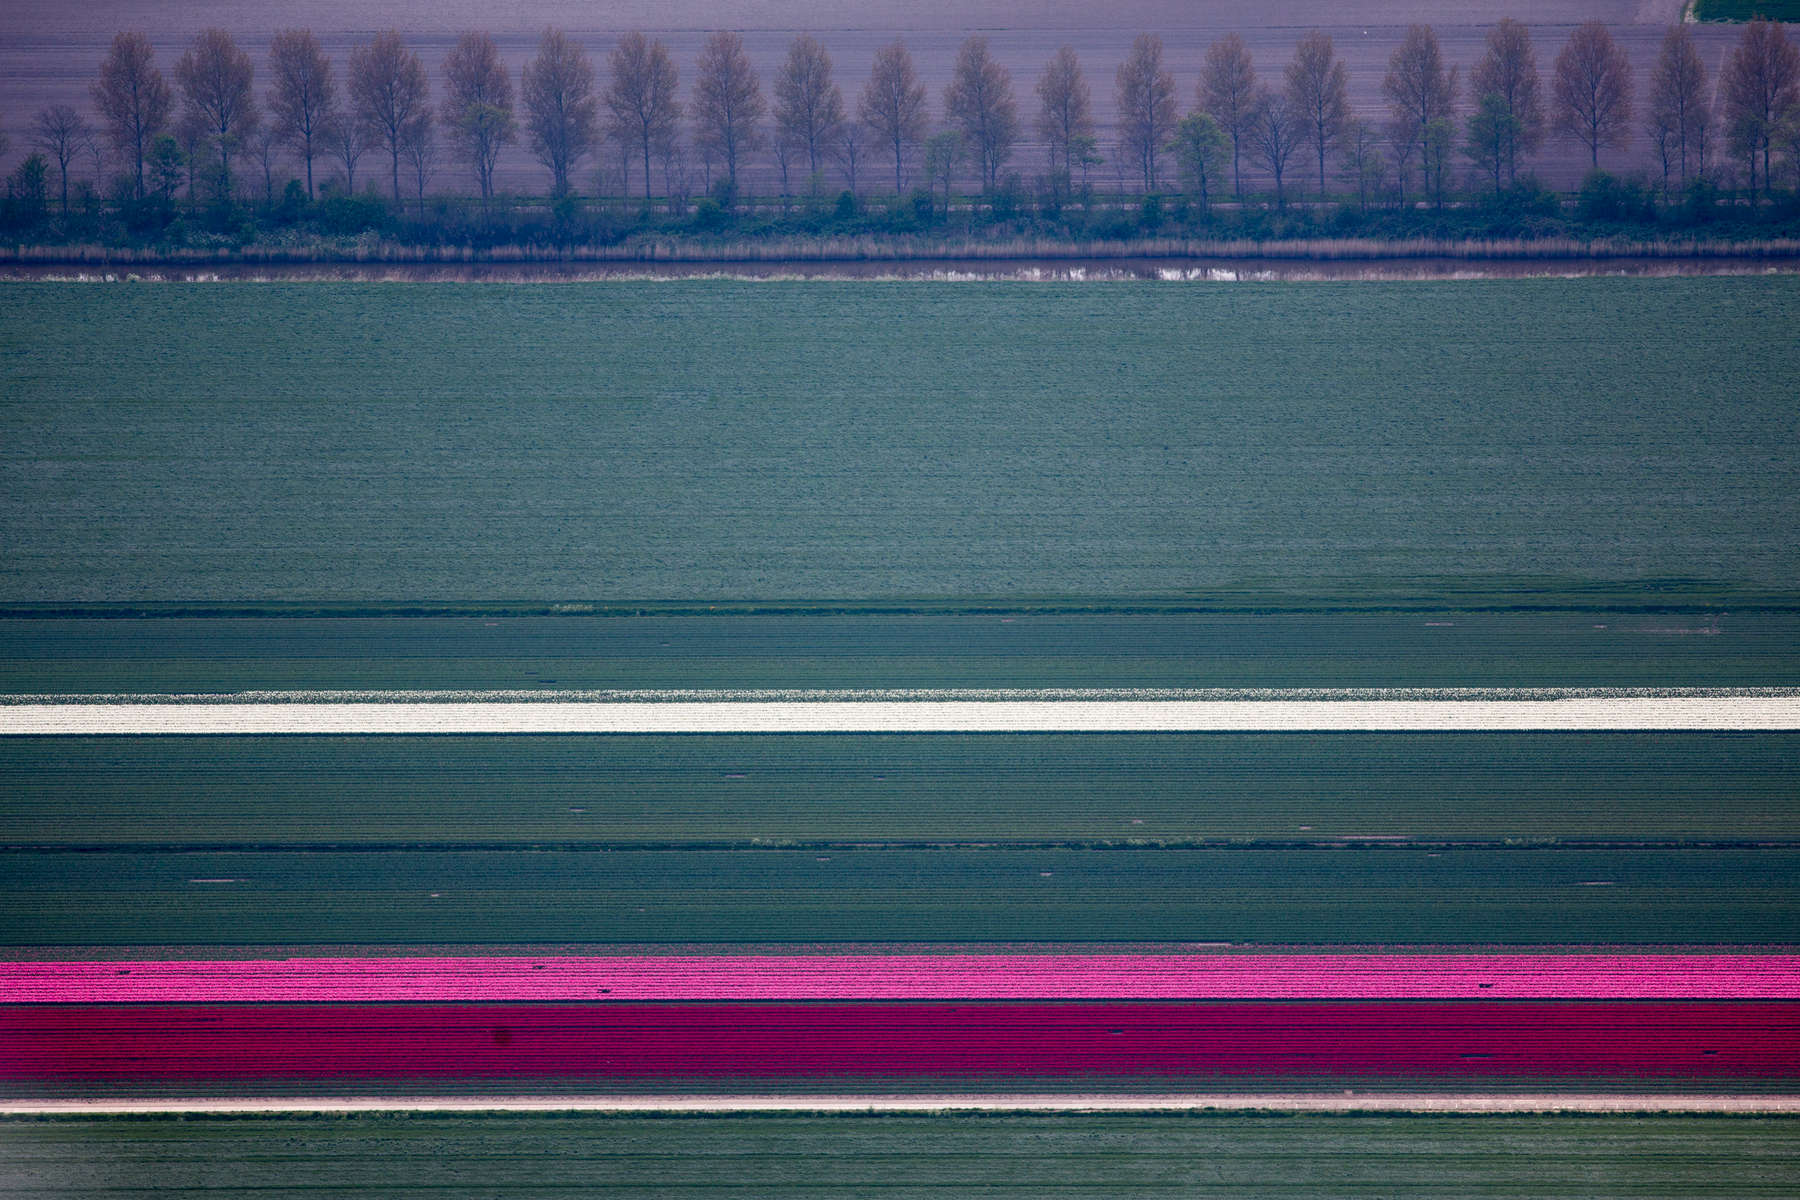 Tulip Bands, Wieringerwerf, Netherlands 2015 (150510-0349)